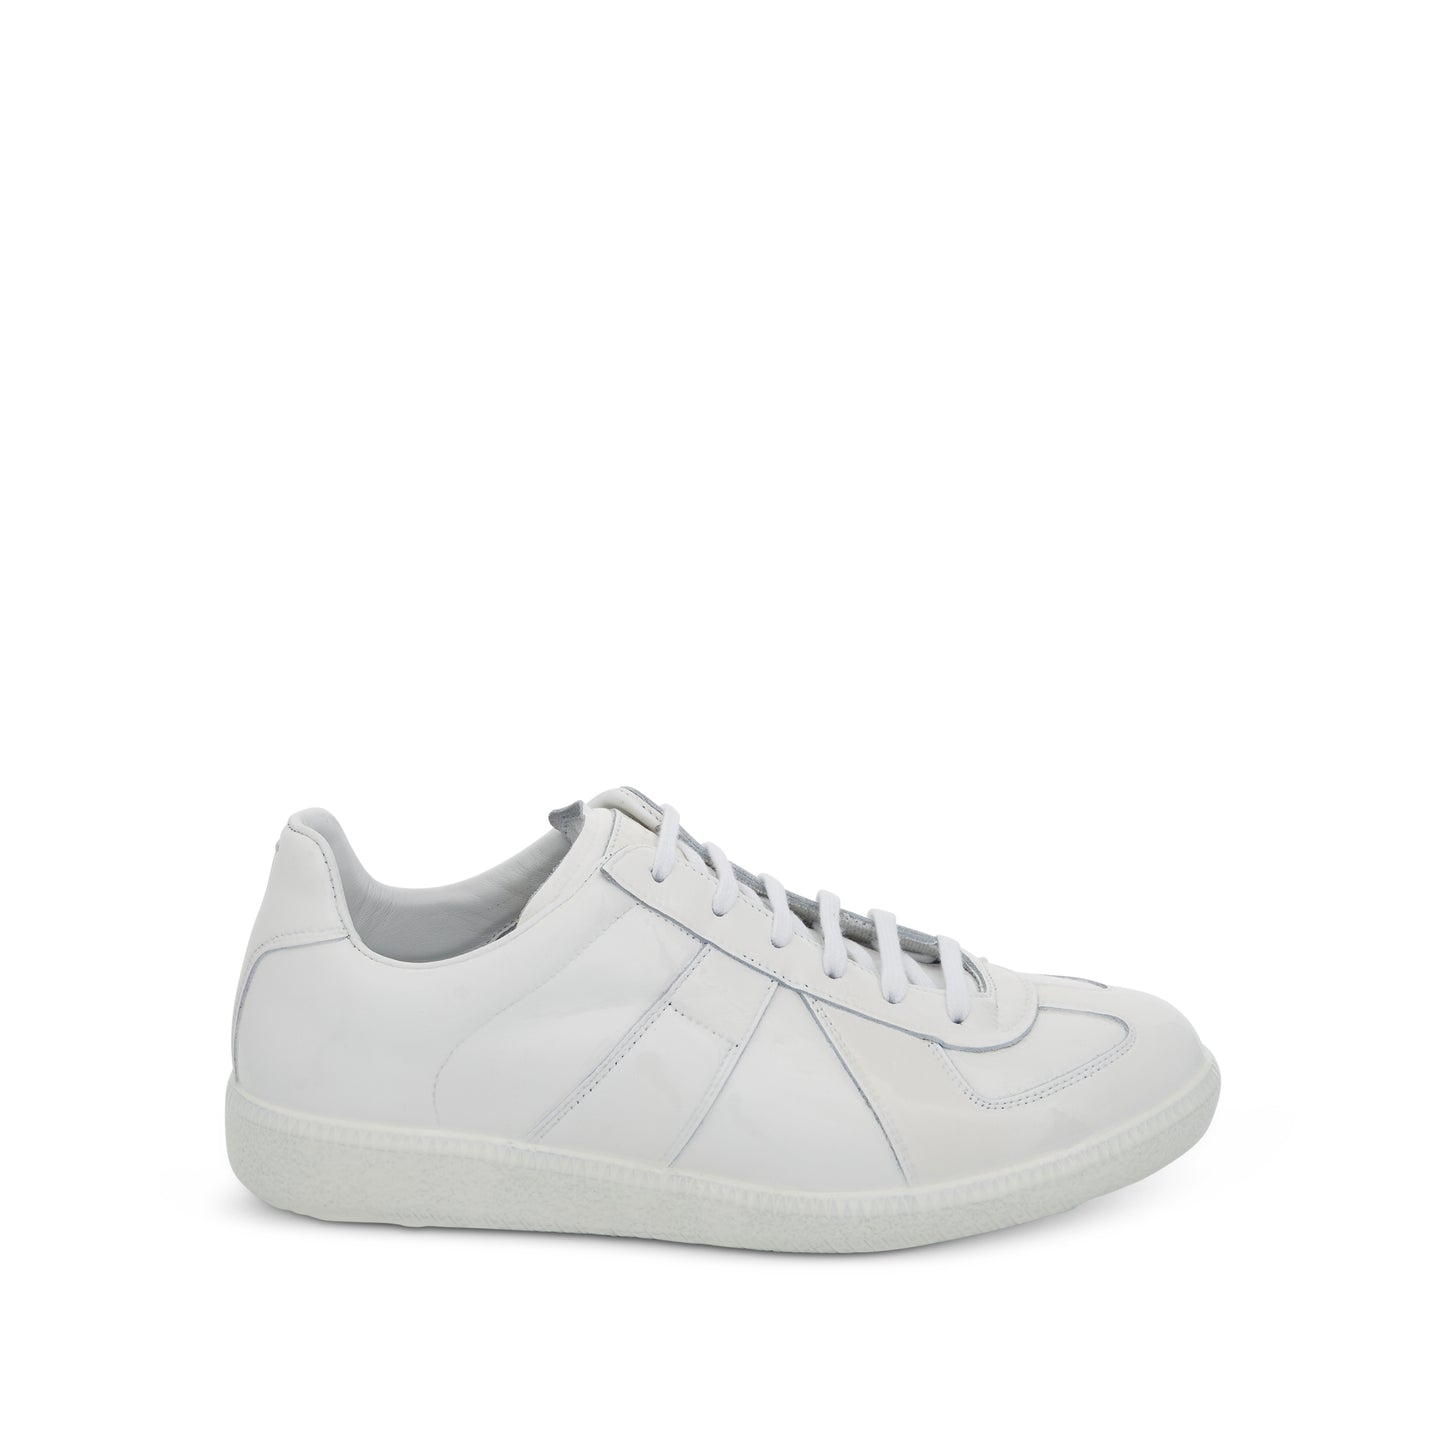 Replica Low Top Sneaker in White